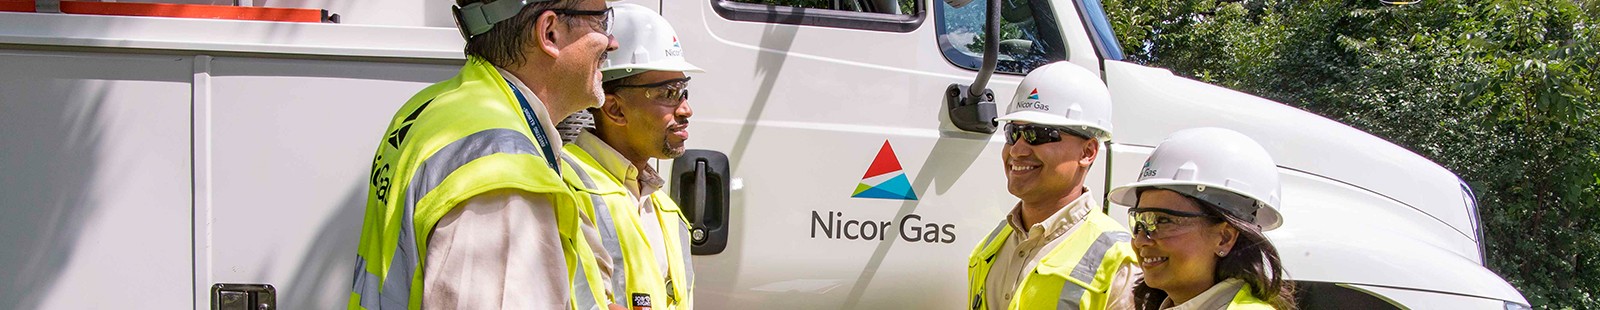 nicor gas workers